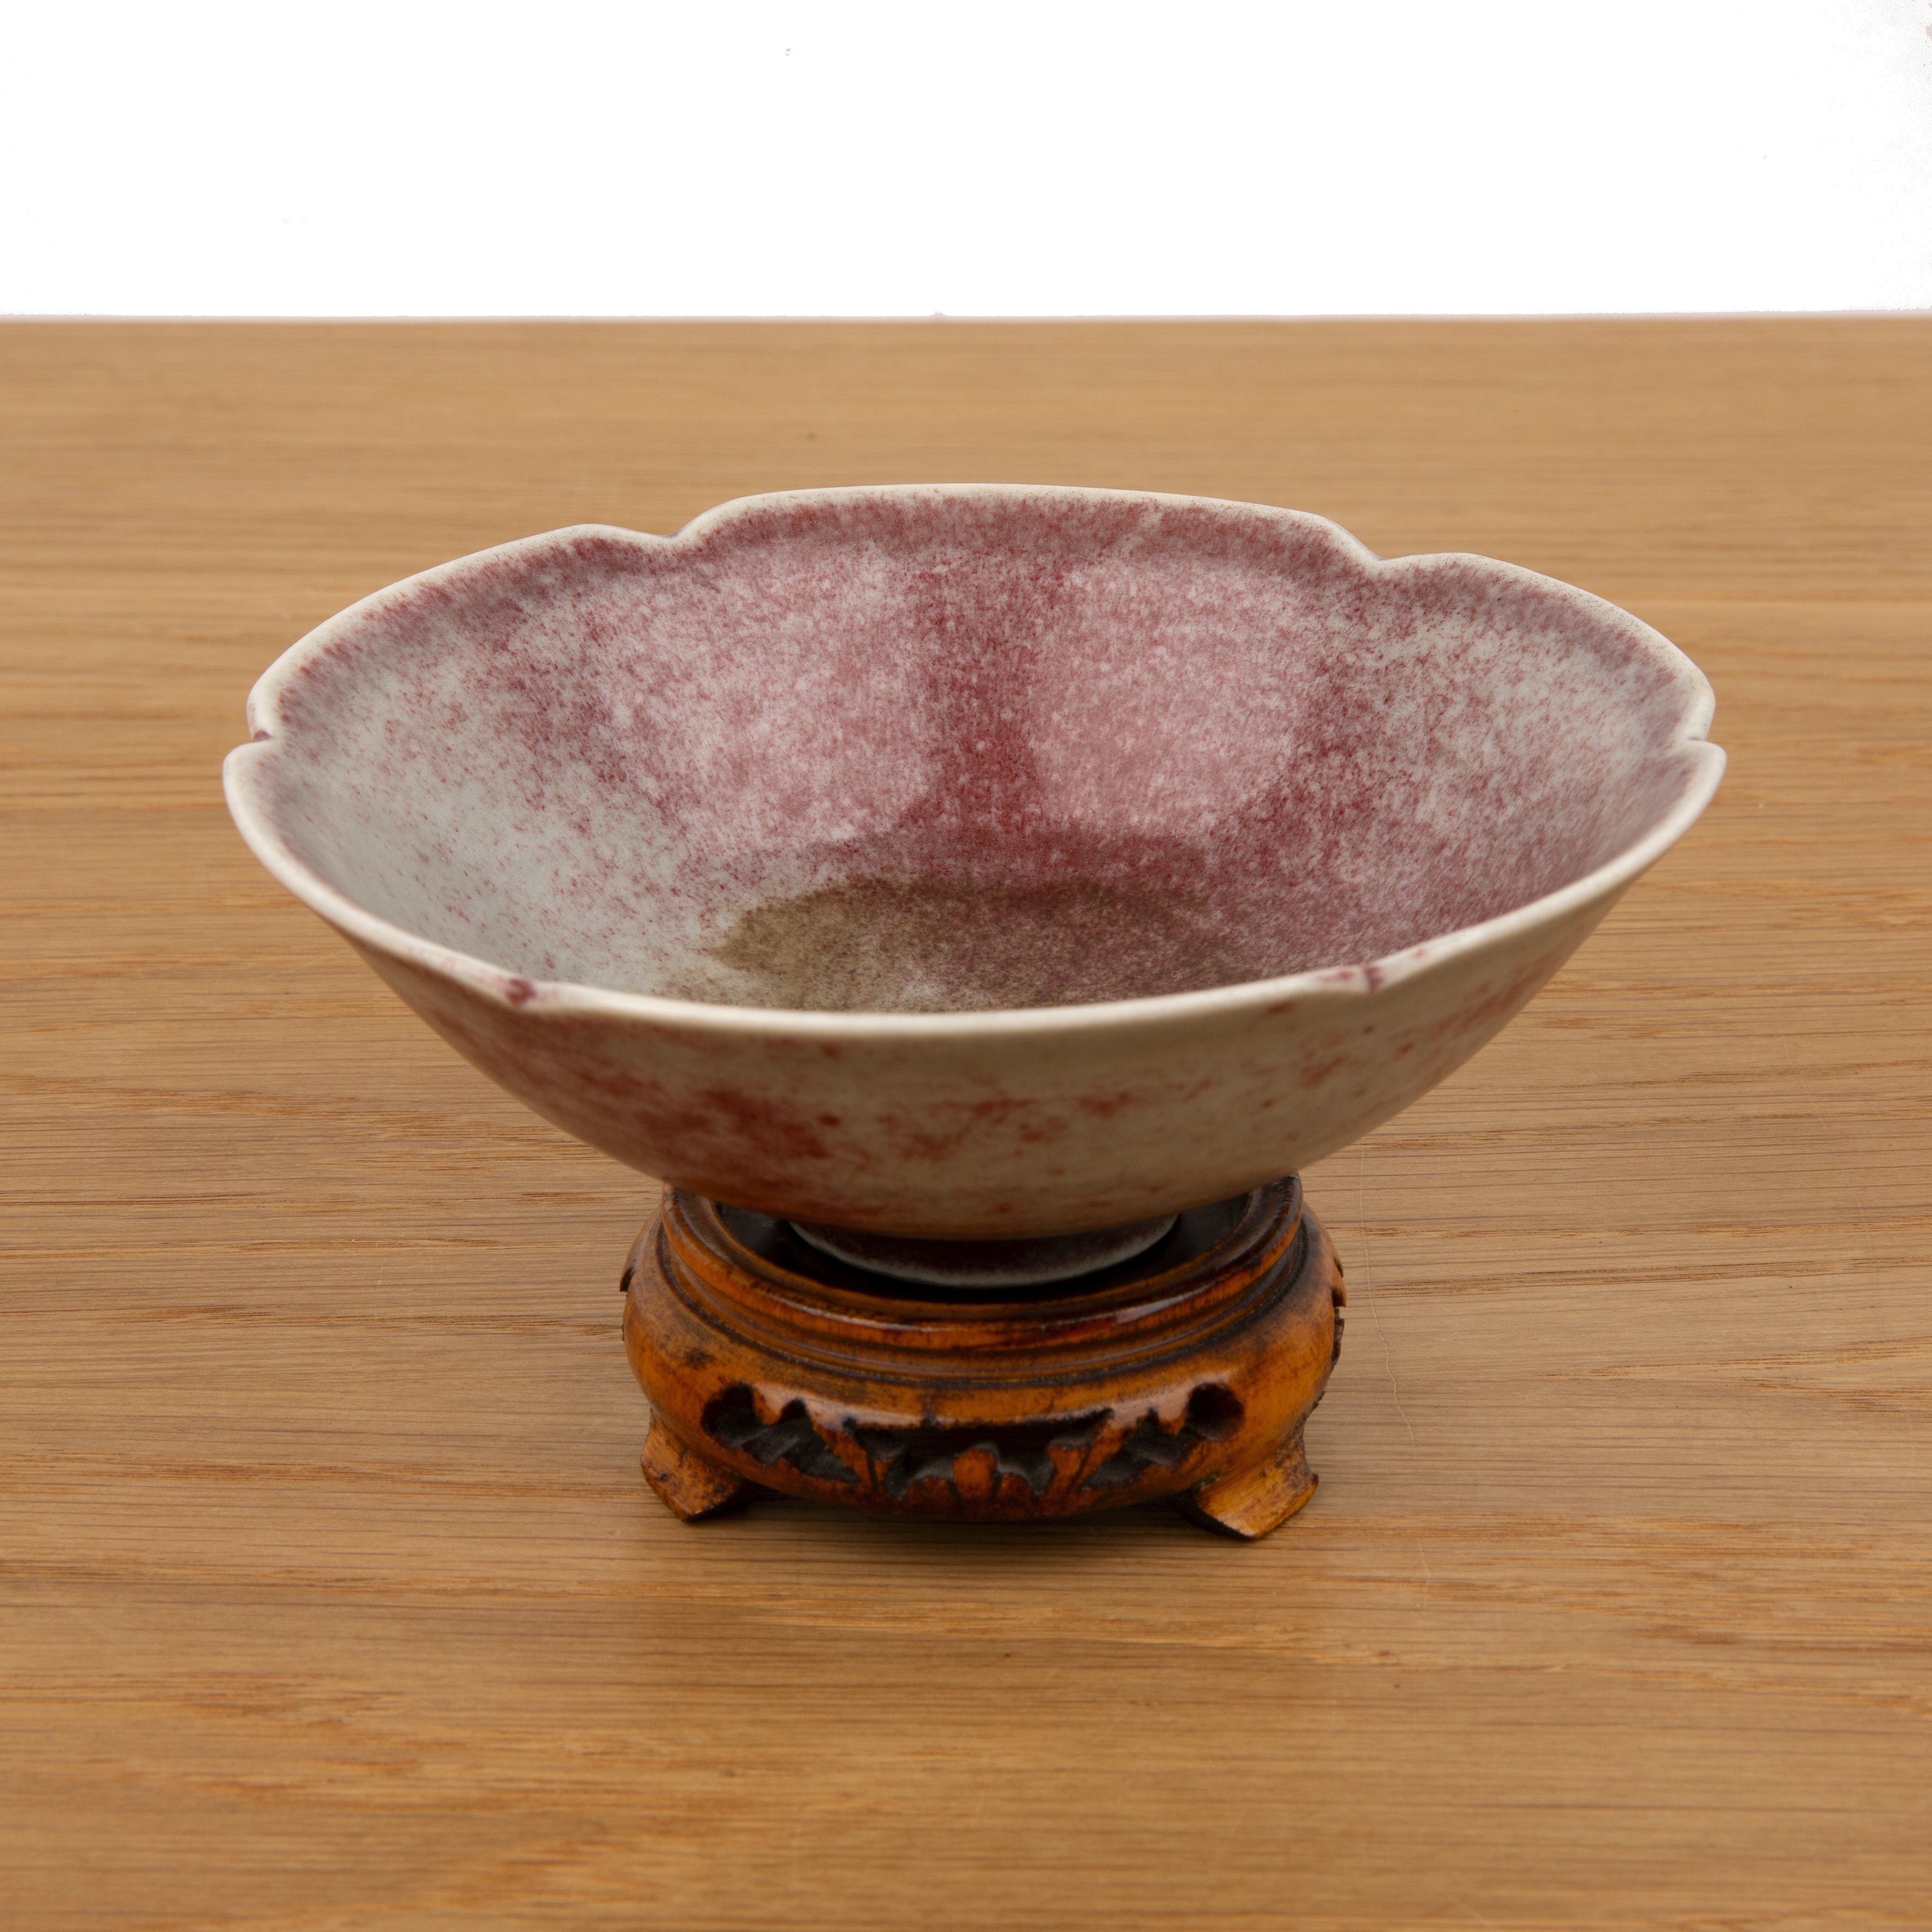 Peach bloom glaze petal-shaped bowl Chinese, 18th Century with a raised foot rim, 13cm diameter x